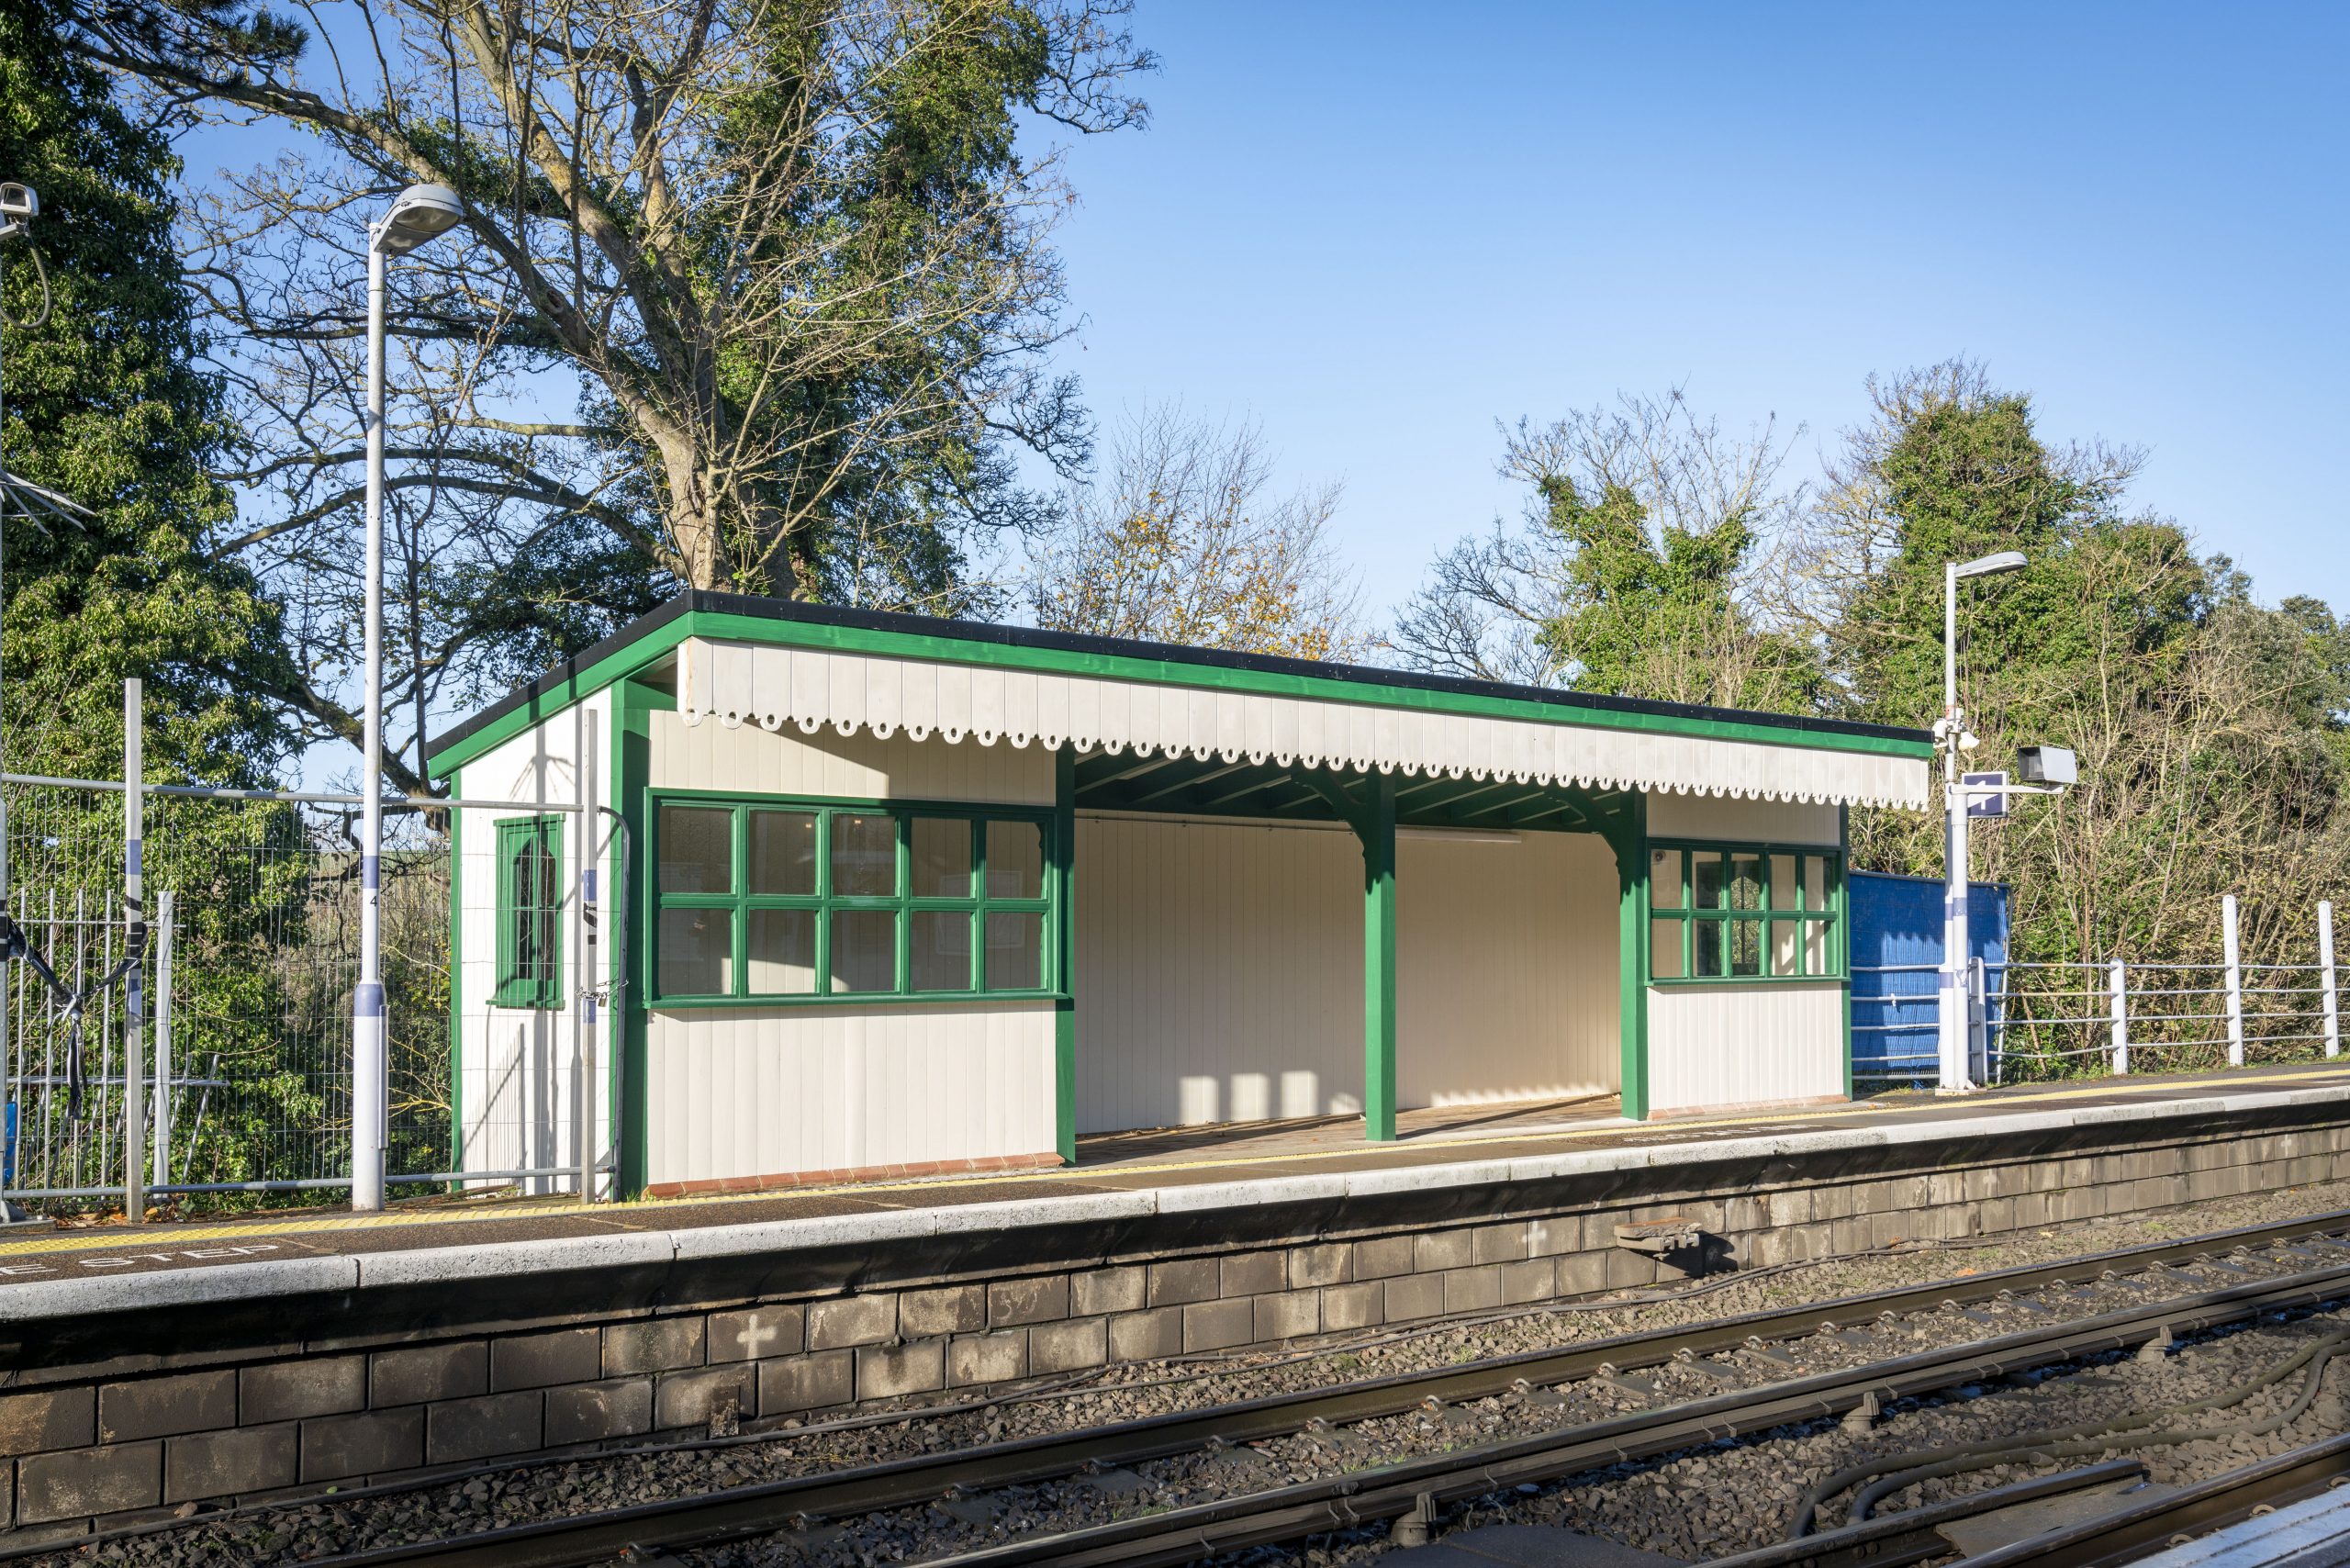 Eynsford station shelter